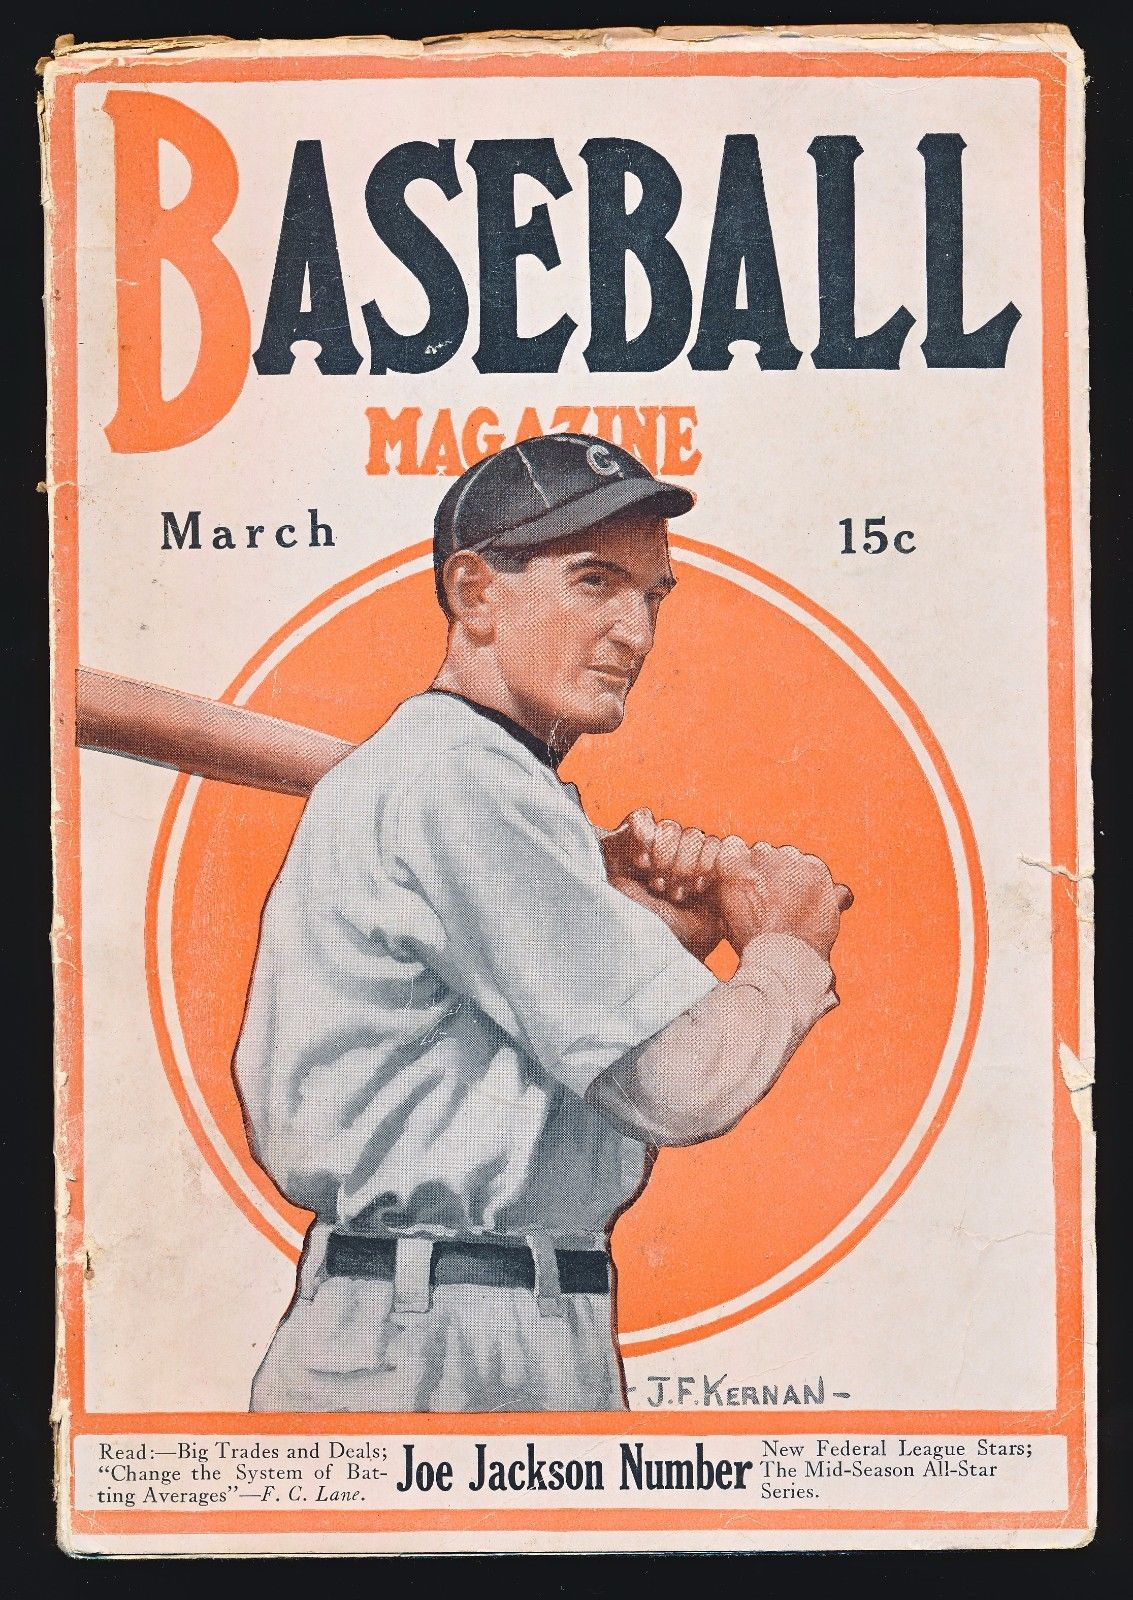 1916 Baseball Magazine — Shoeless Joe Jackson Museum